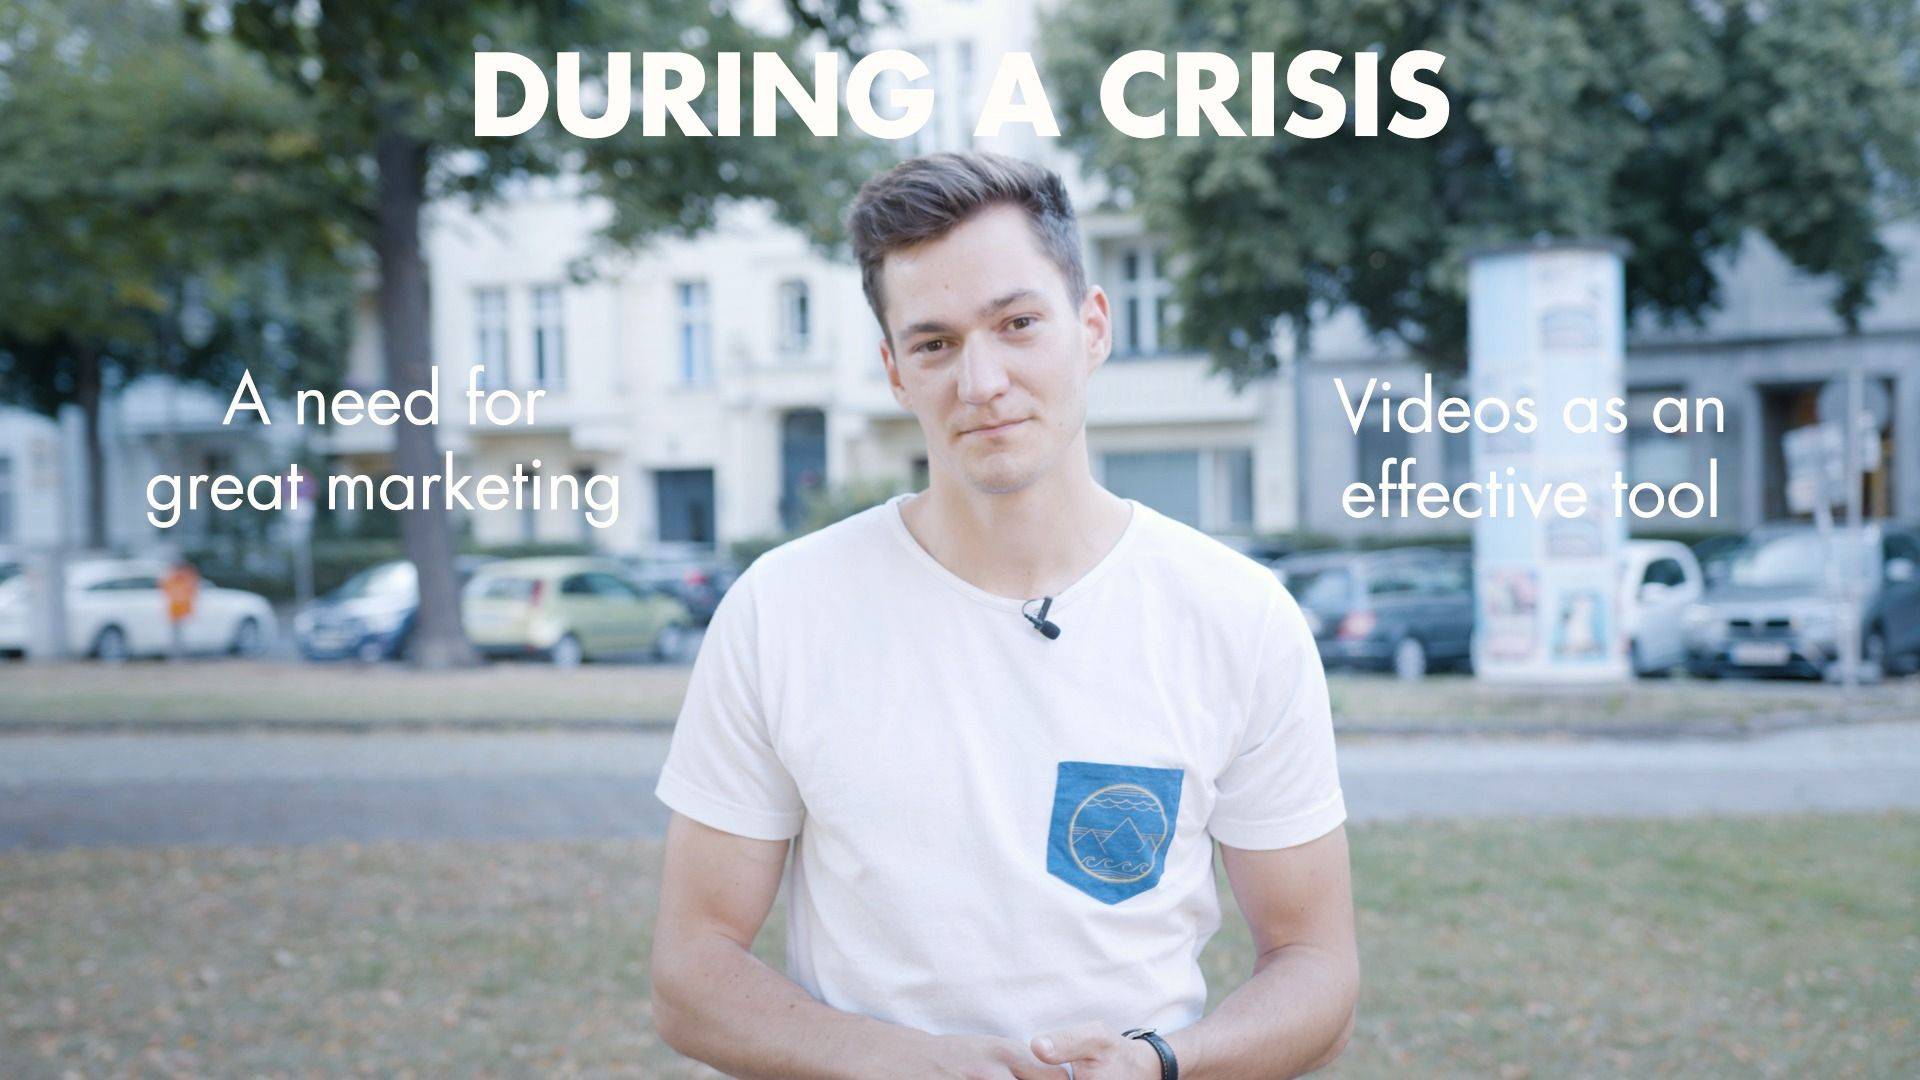 Video shoot during a crisis videographer talks